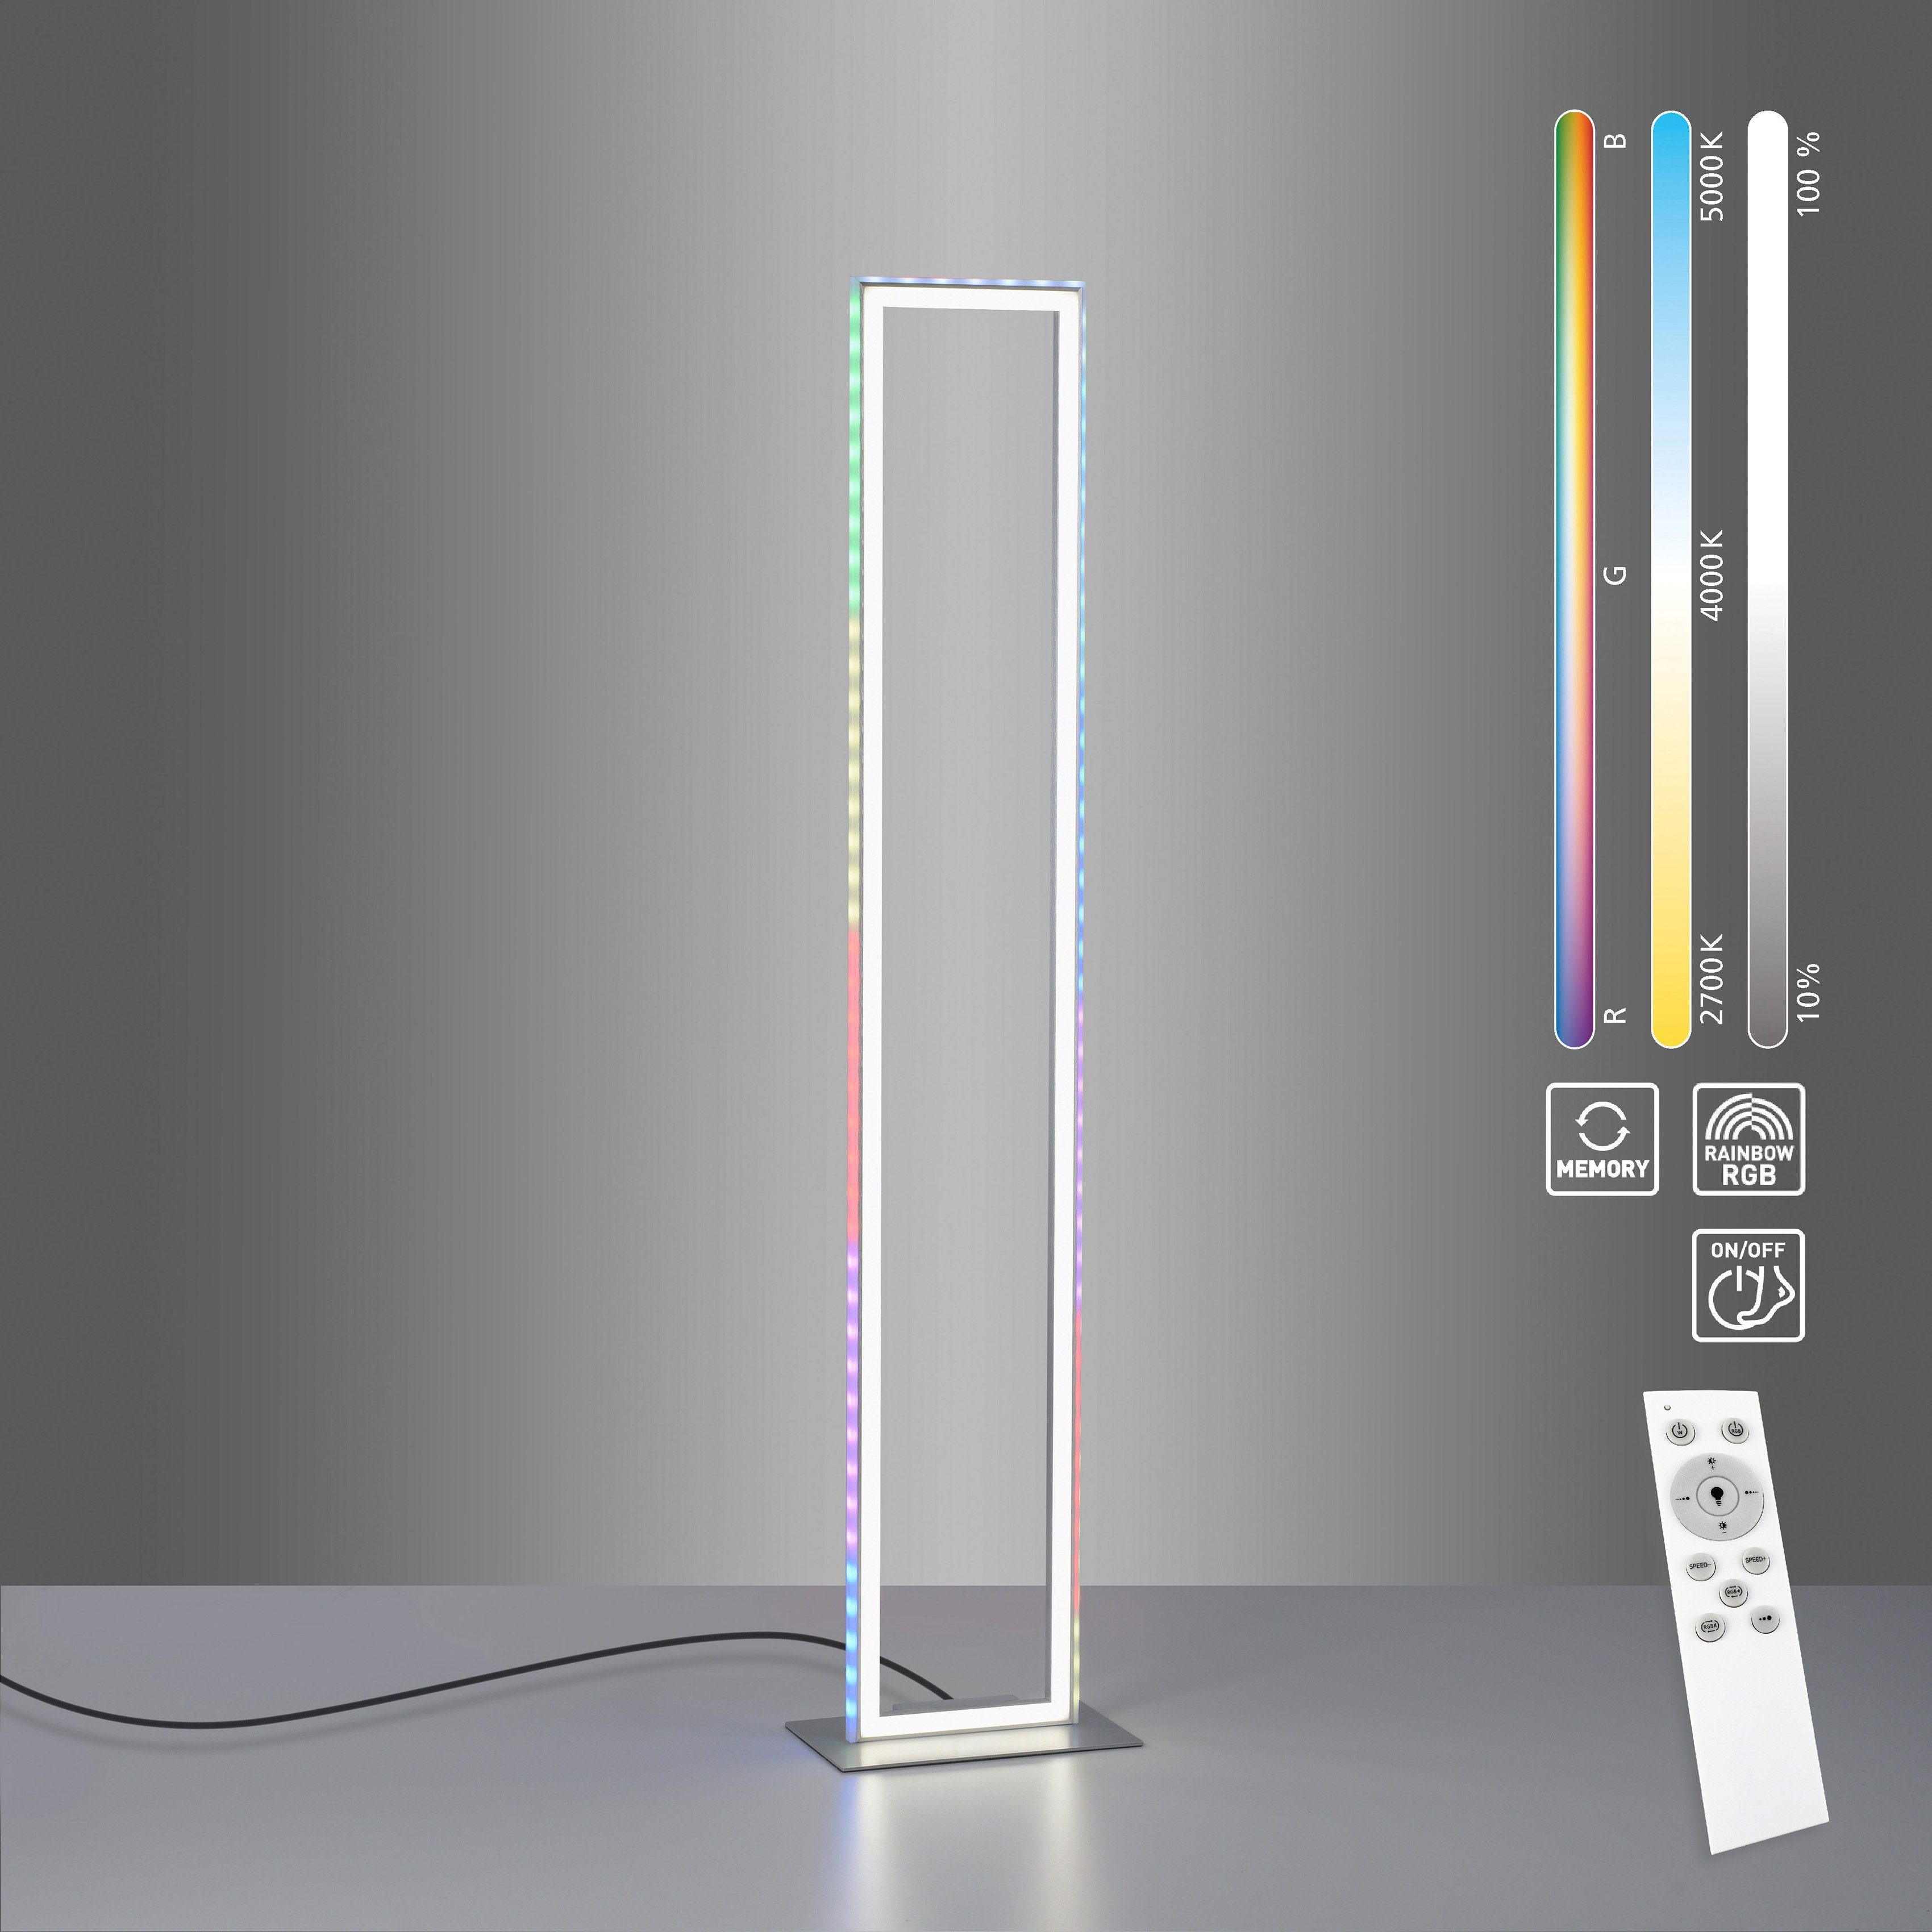 Downlight: 2700-5000K, Infrarot-Fernbed. Fernbedienung, über LED Rainbow-RGB, my integriert, kaltweiß, LED fest inkl. home Luan, Sidelight: warmweiß dimmbar - Stehlampe